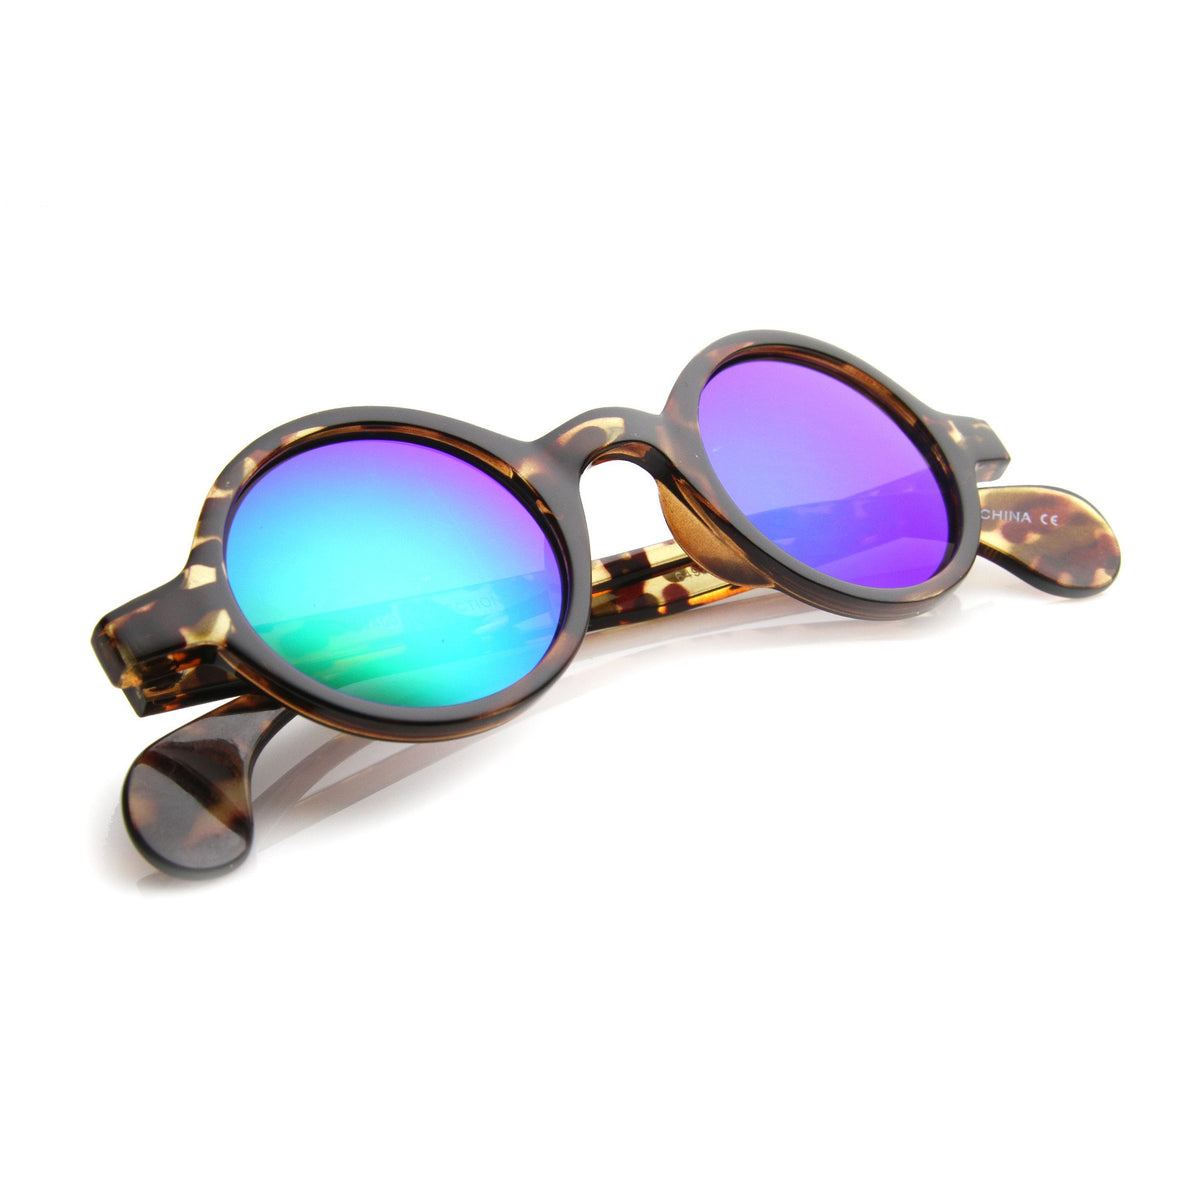 Vintage Inspired Small Round Revo Lens Sunglasses Zerouv